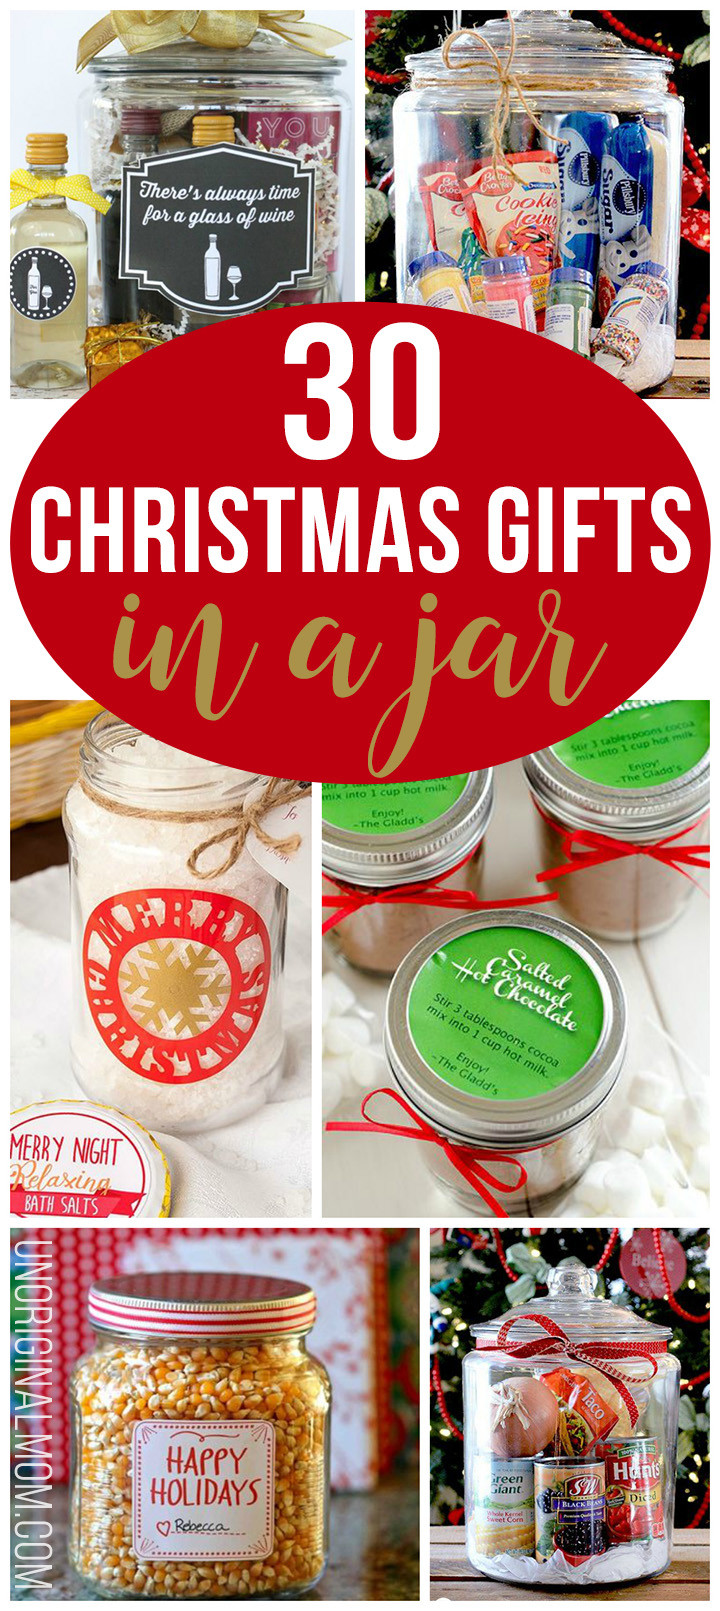 Great DIY Christmas Gifts
 30 Christmas Gifts in a Jar unOriginal Mom